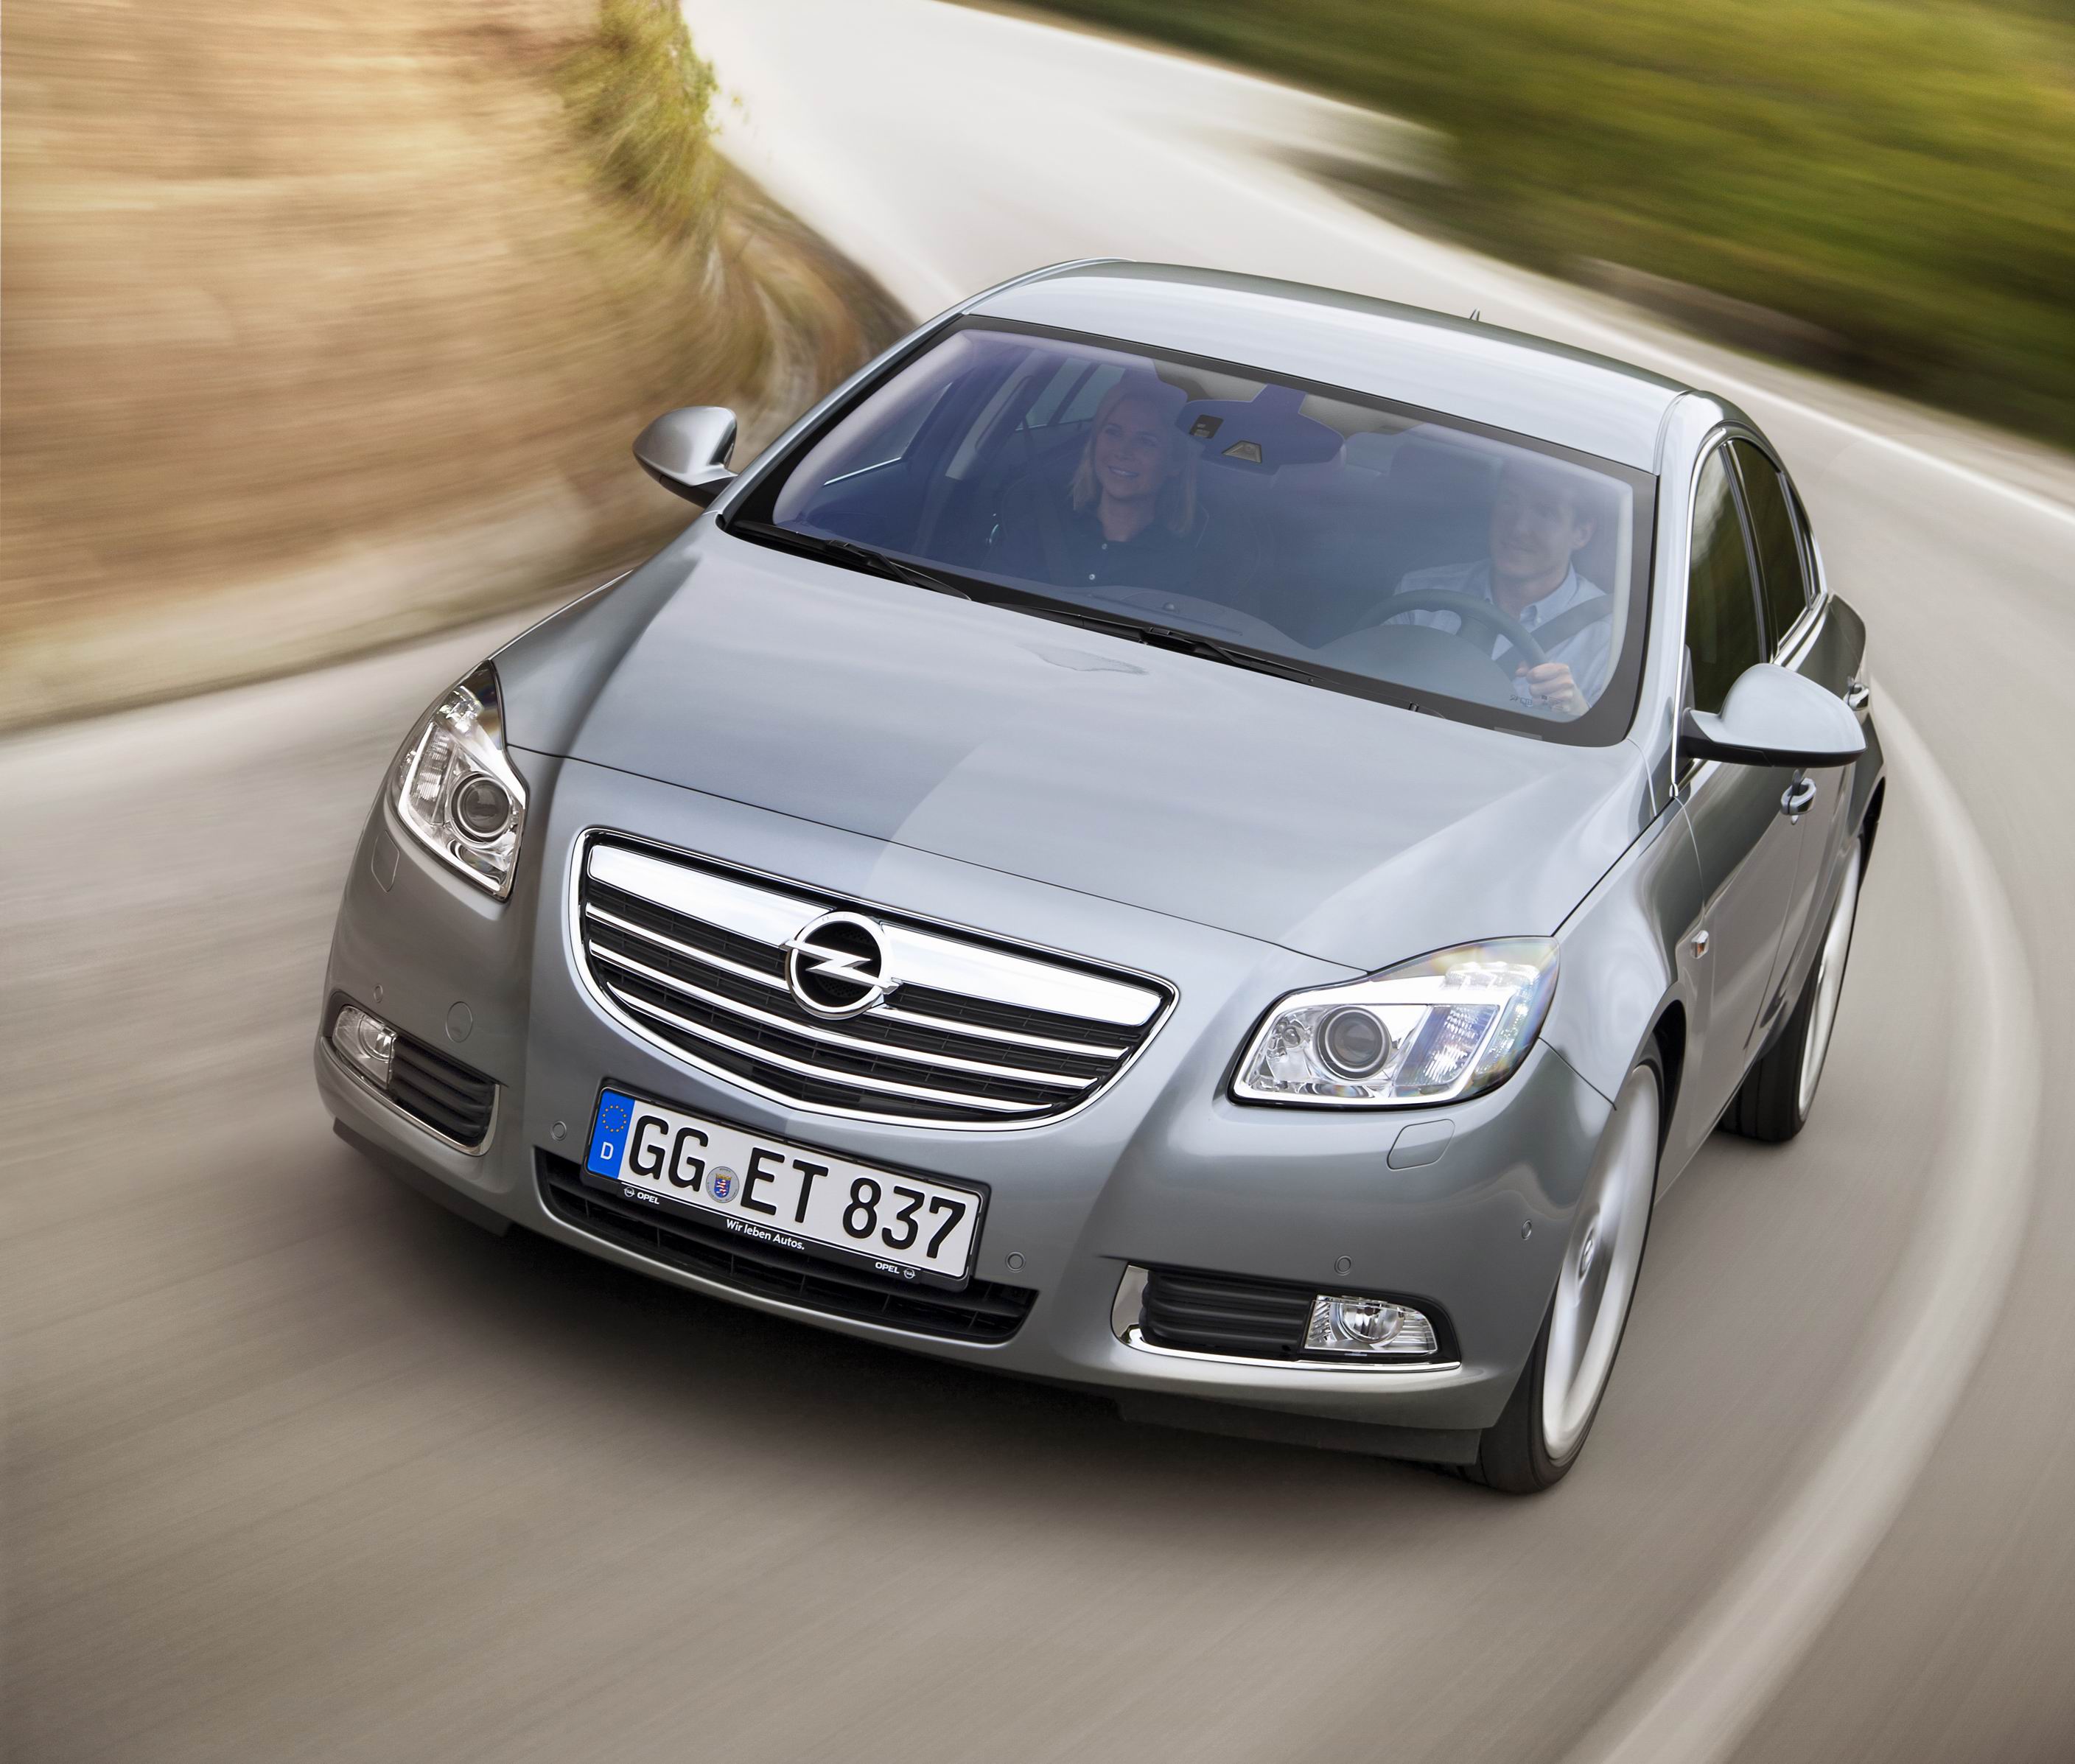 Opel Insignia Articles Features Gallery Buy | Genuardis Portal